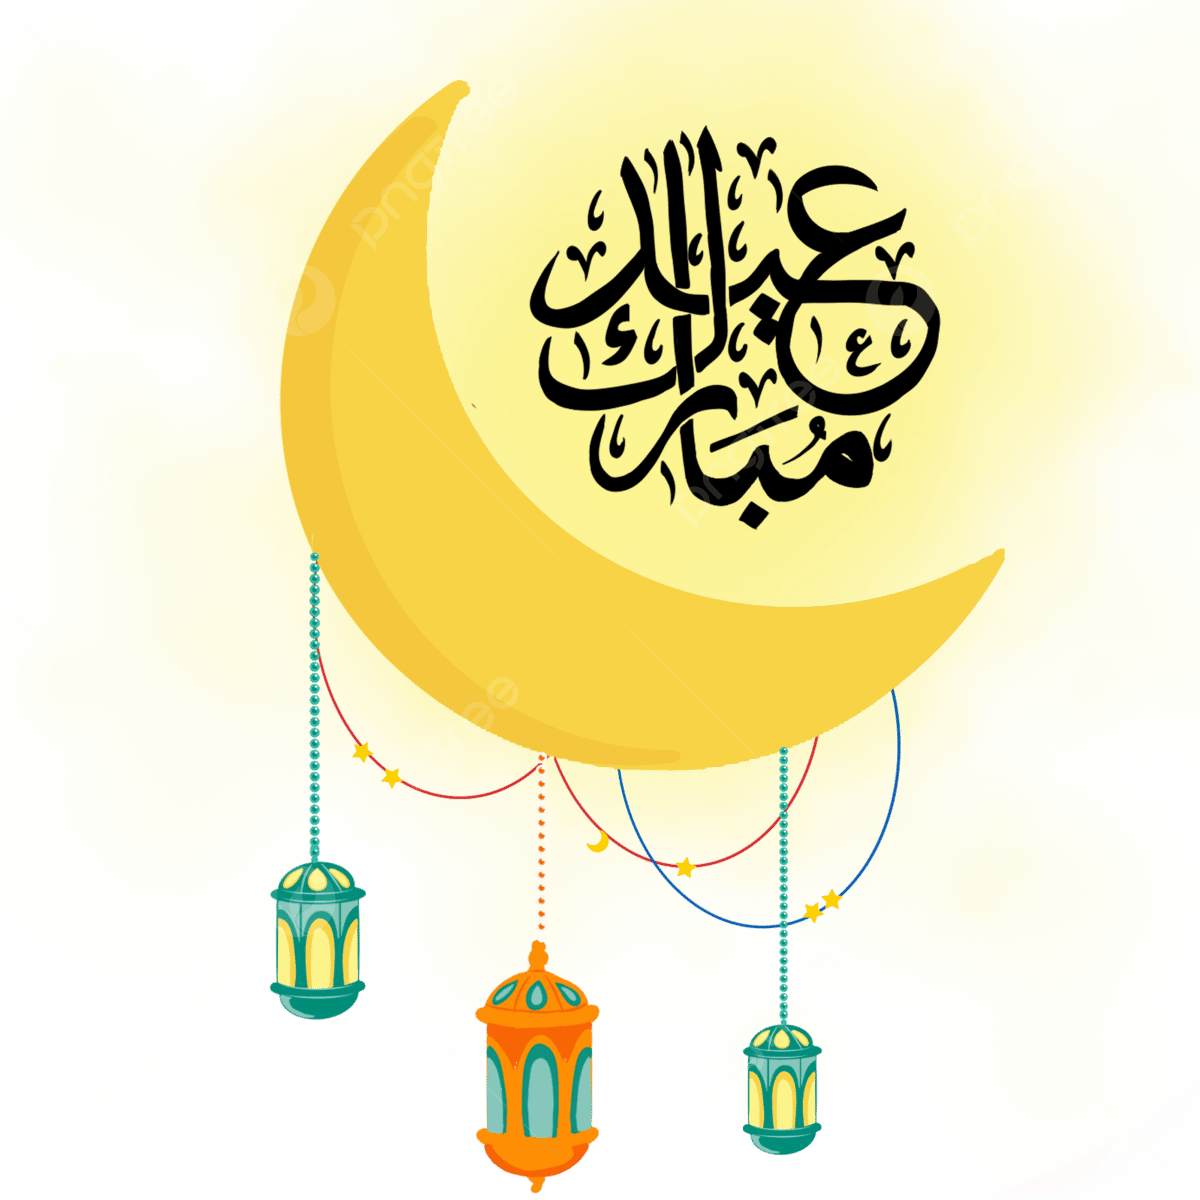 Eid mubarak vector fitr lantern lanterns vectors vektor calligraphy kostenlos lanterne islamique calligraphie arabe lune vecteezy vecteur gratuit yogreetings conception